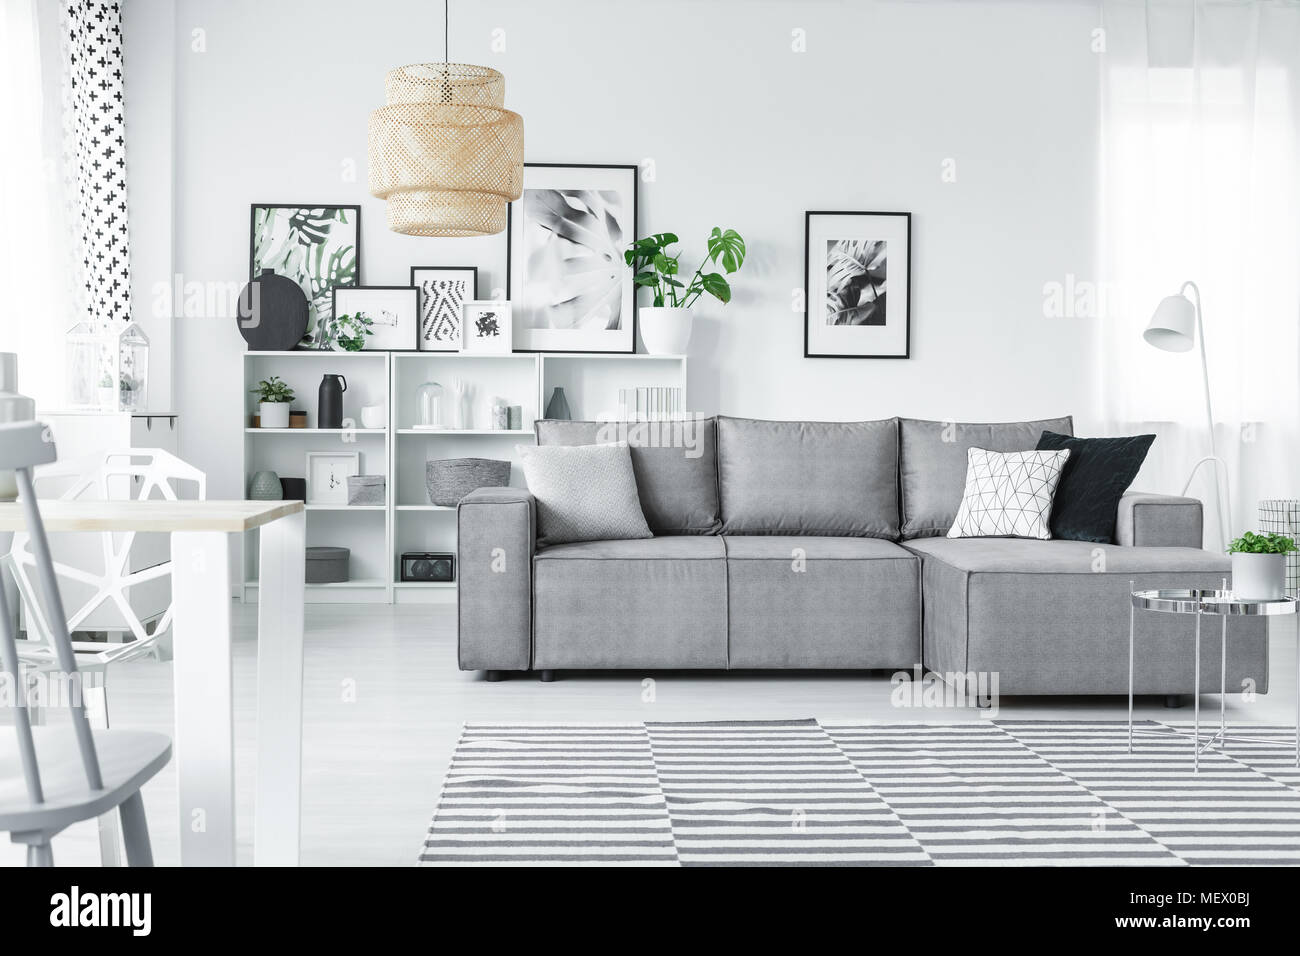 White Studio Interior In Scandinavian Style With Grey Corner